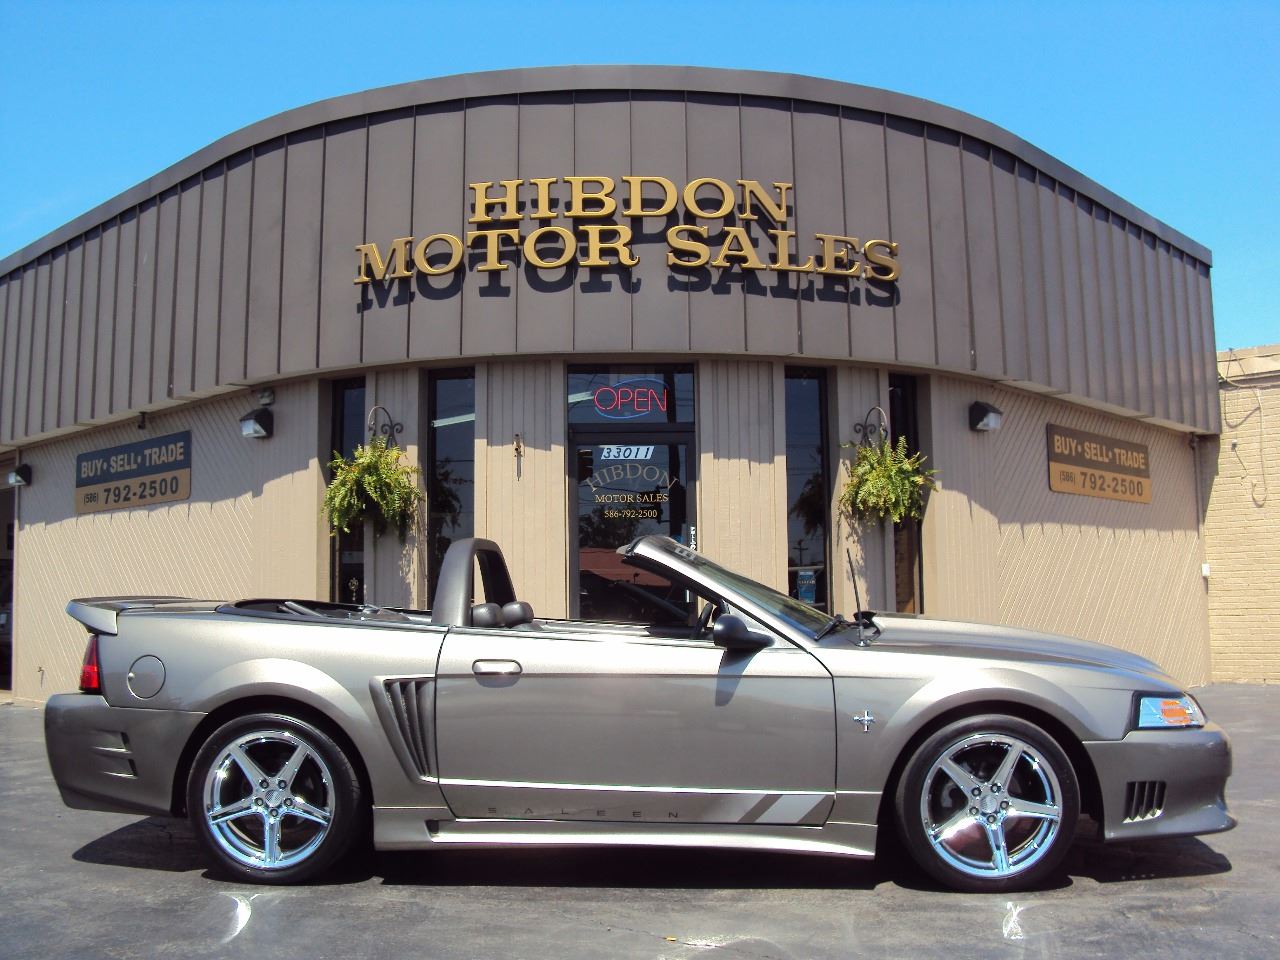 Hibdon Motor Sales